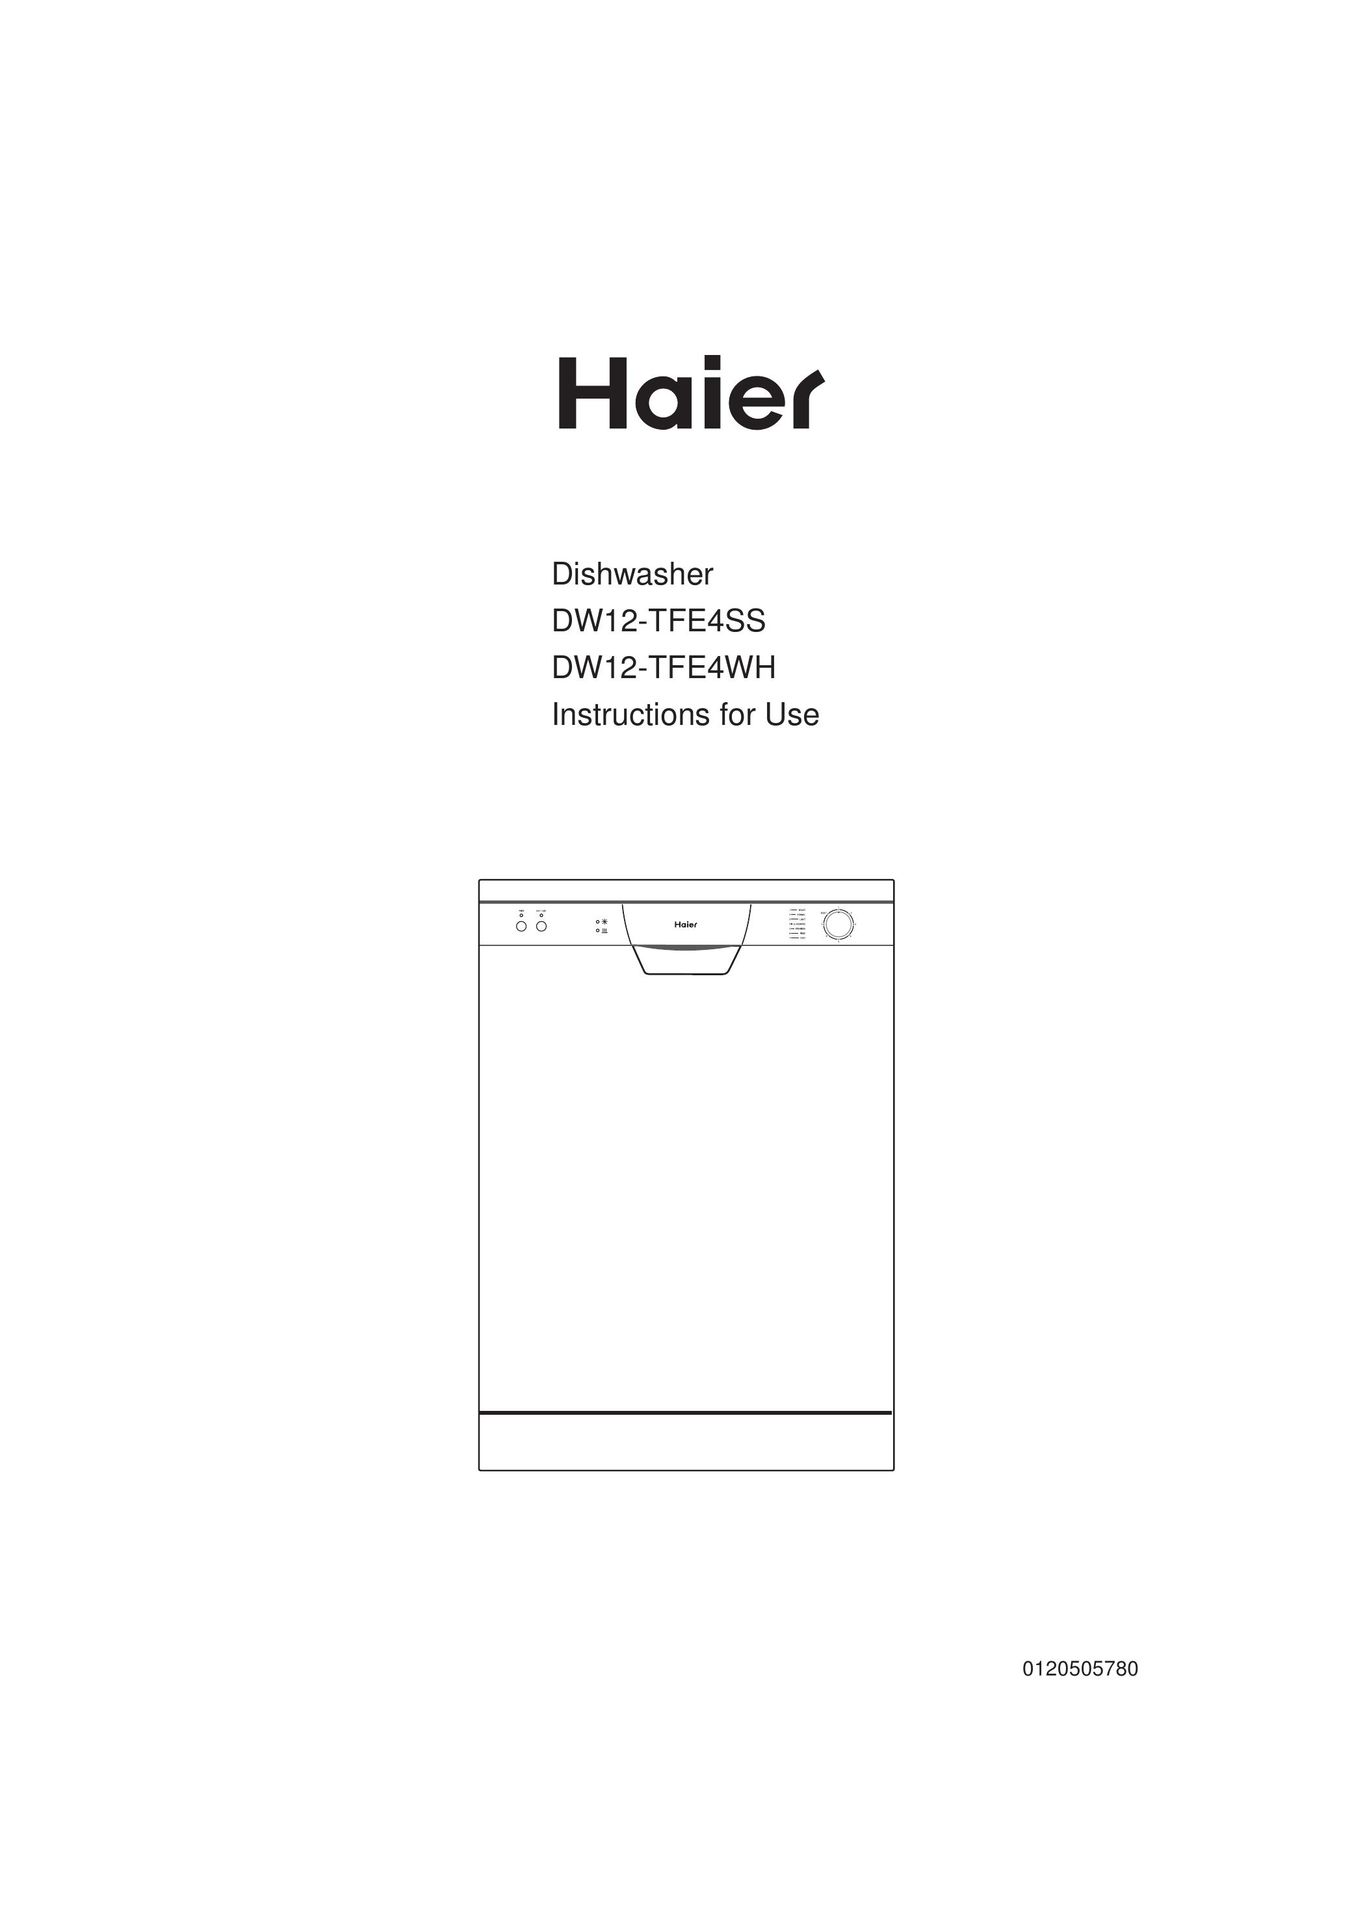 Haier DW12-TFE4SS Dishwasher User Manual